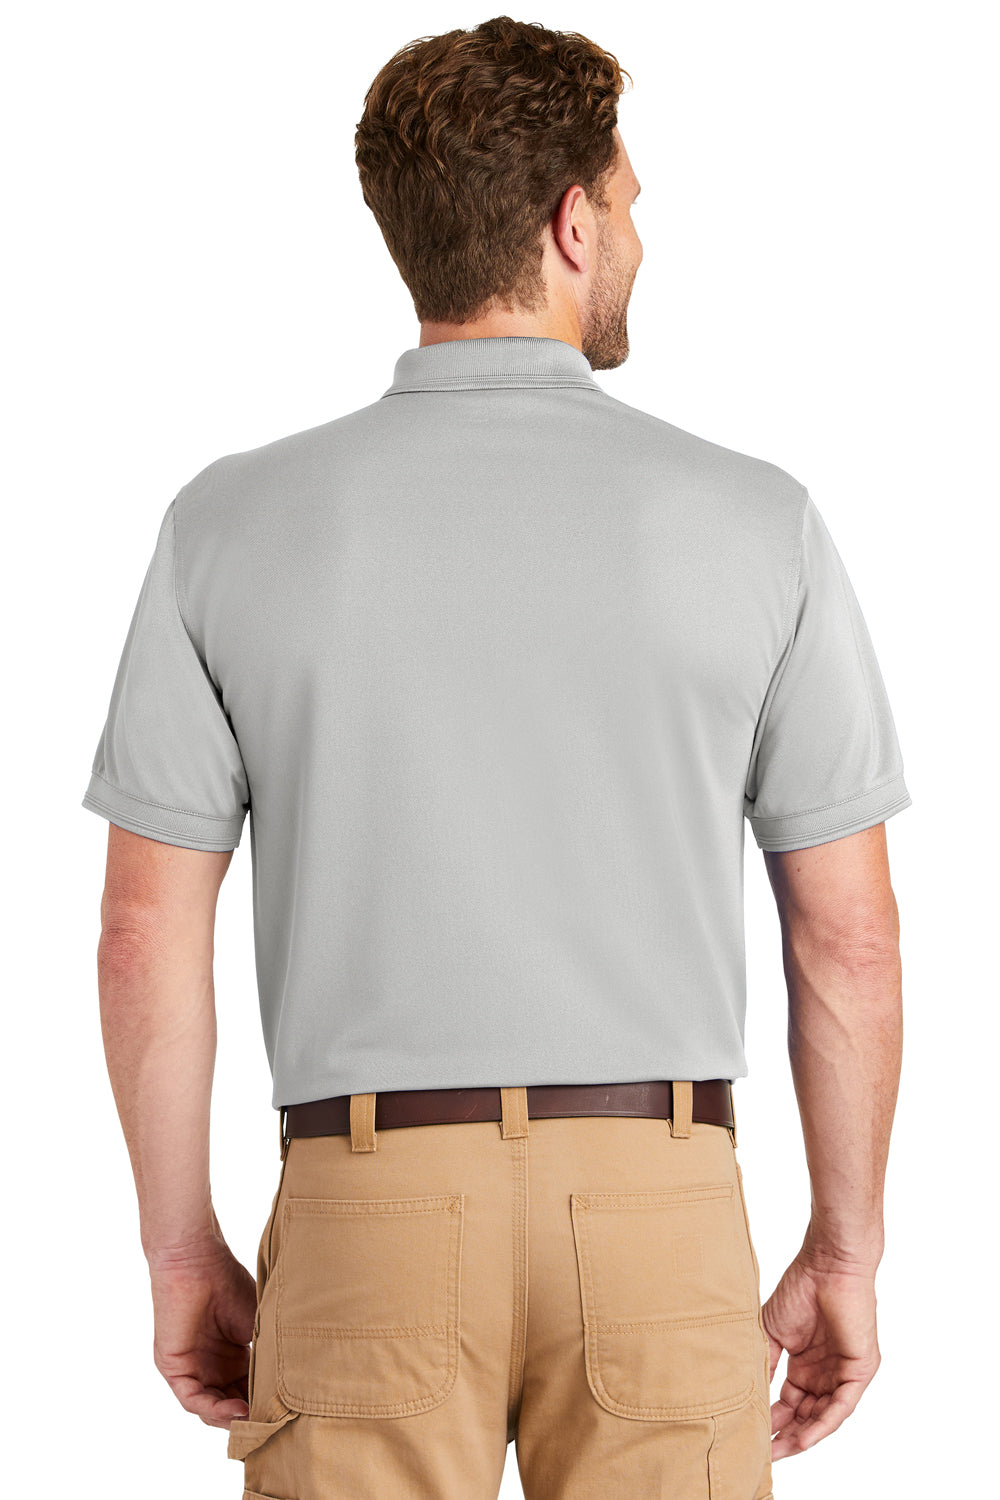 CornerStone CS4020P Mens Industrial Moisture Wicking Short Sleeve Polo Shirt w/ Pocket Light Grey Back